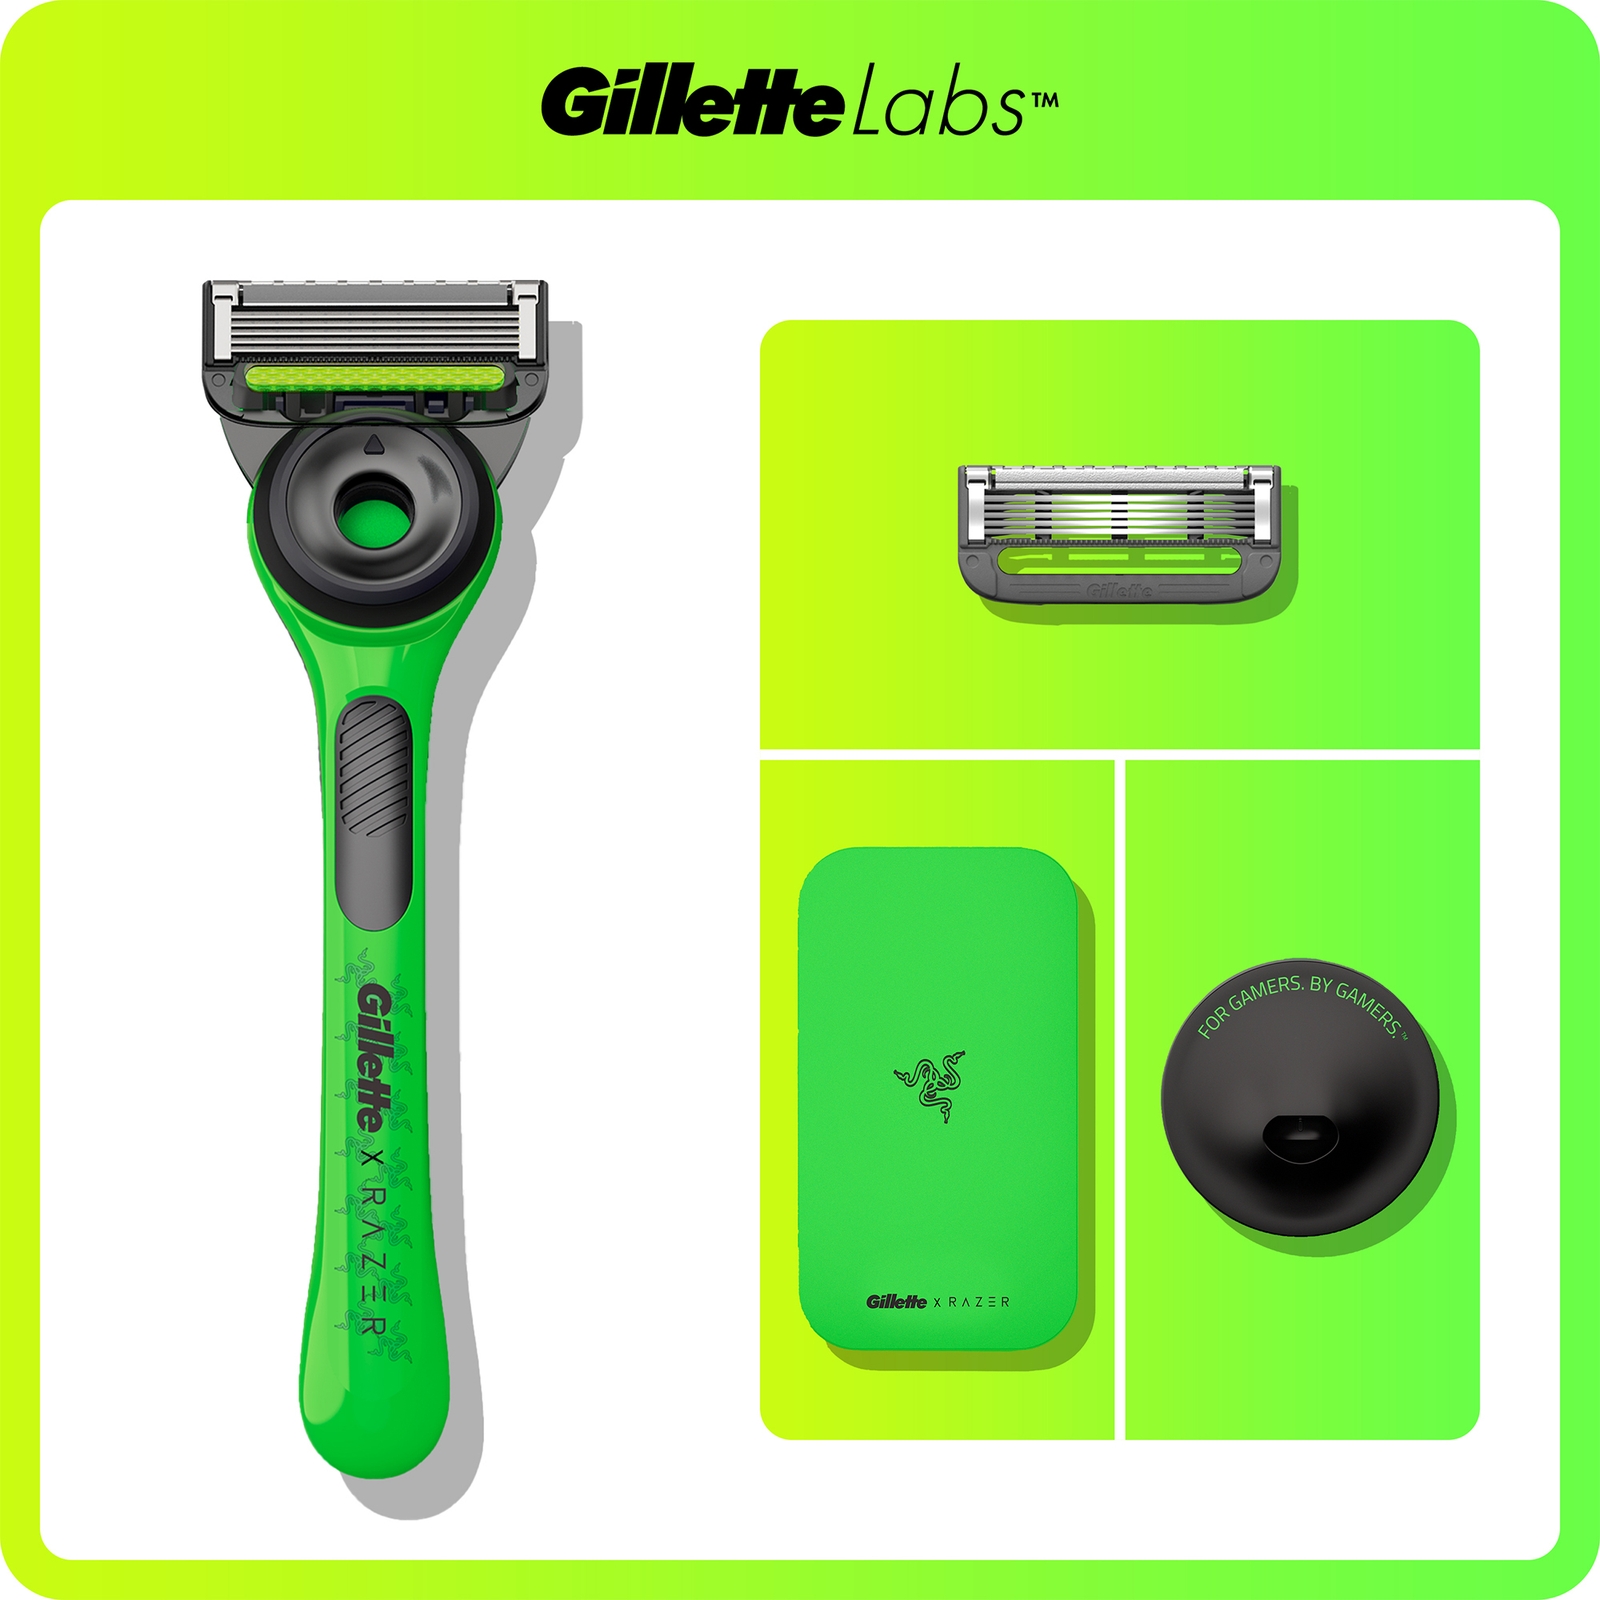 Gillette Labs Razer Razor Limited Edition - with Travel Case & 1 Blade Refill